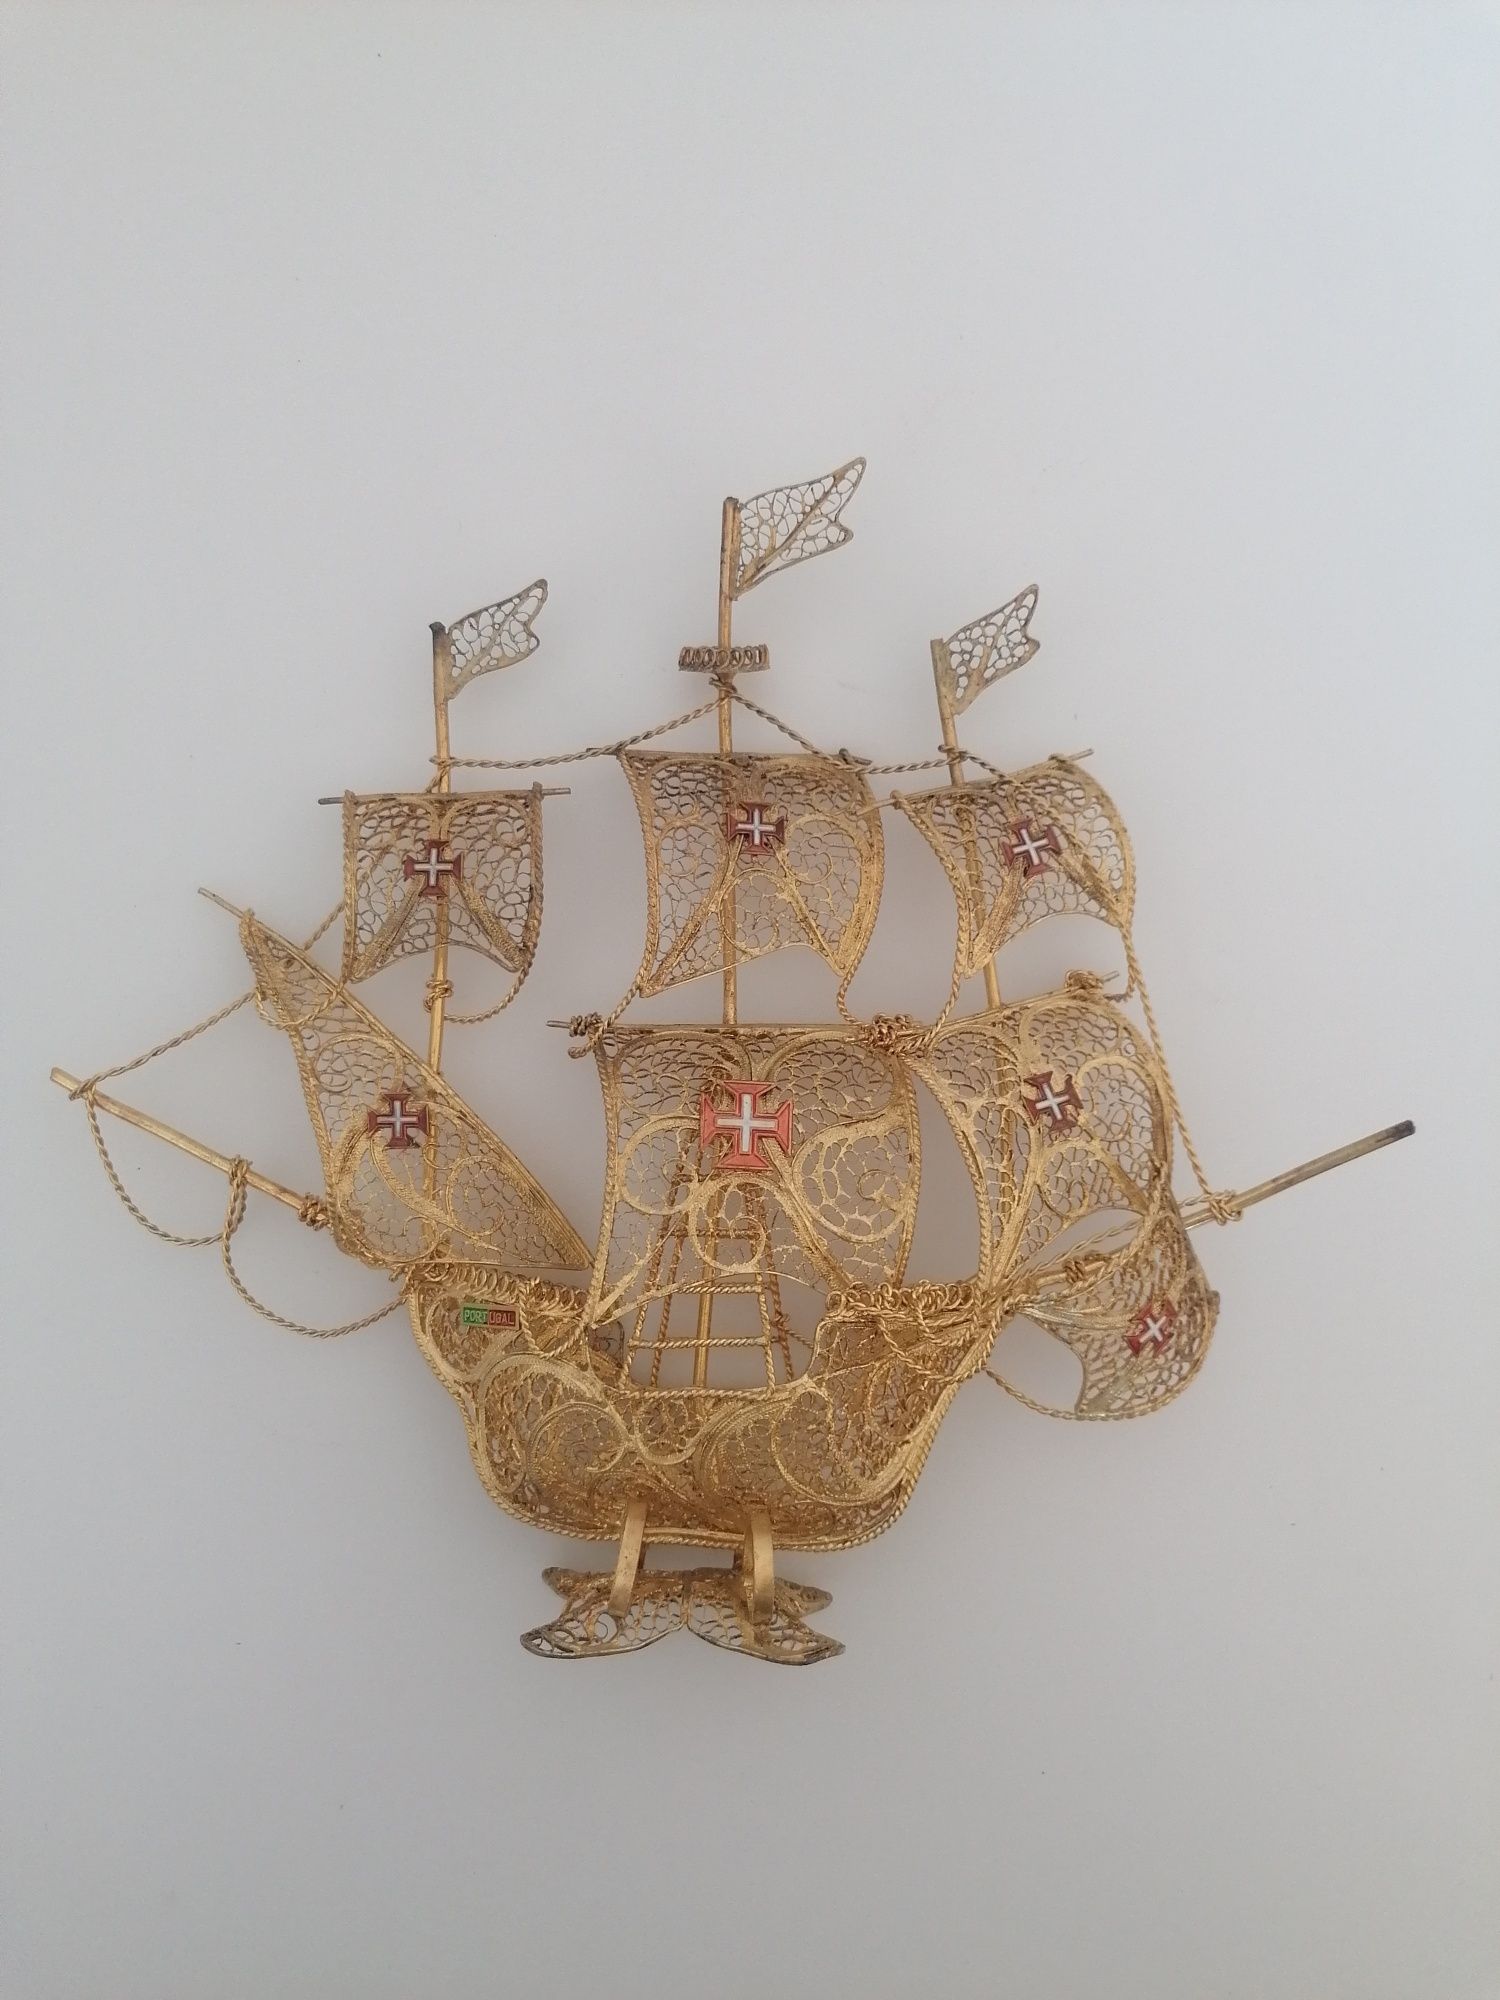 Caravelas Portuguesas - Artesanato Metal Dourado - Barcos Portugal